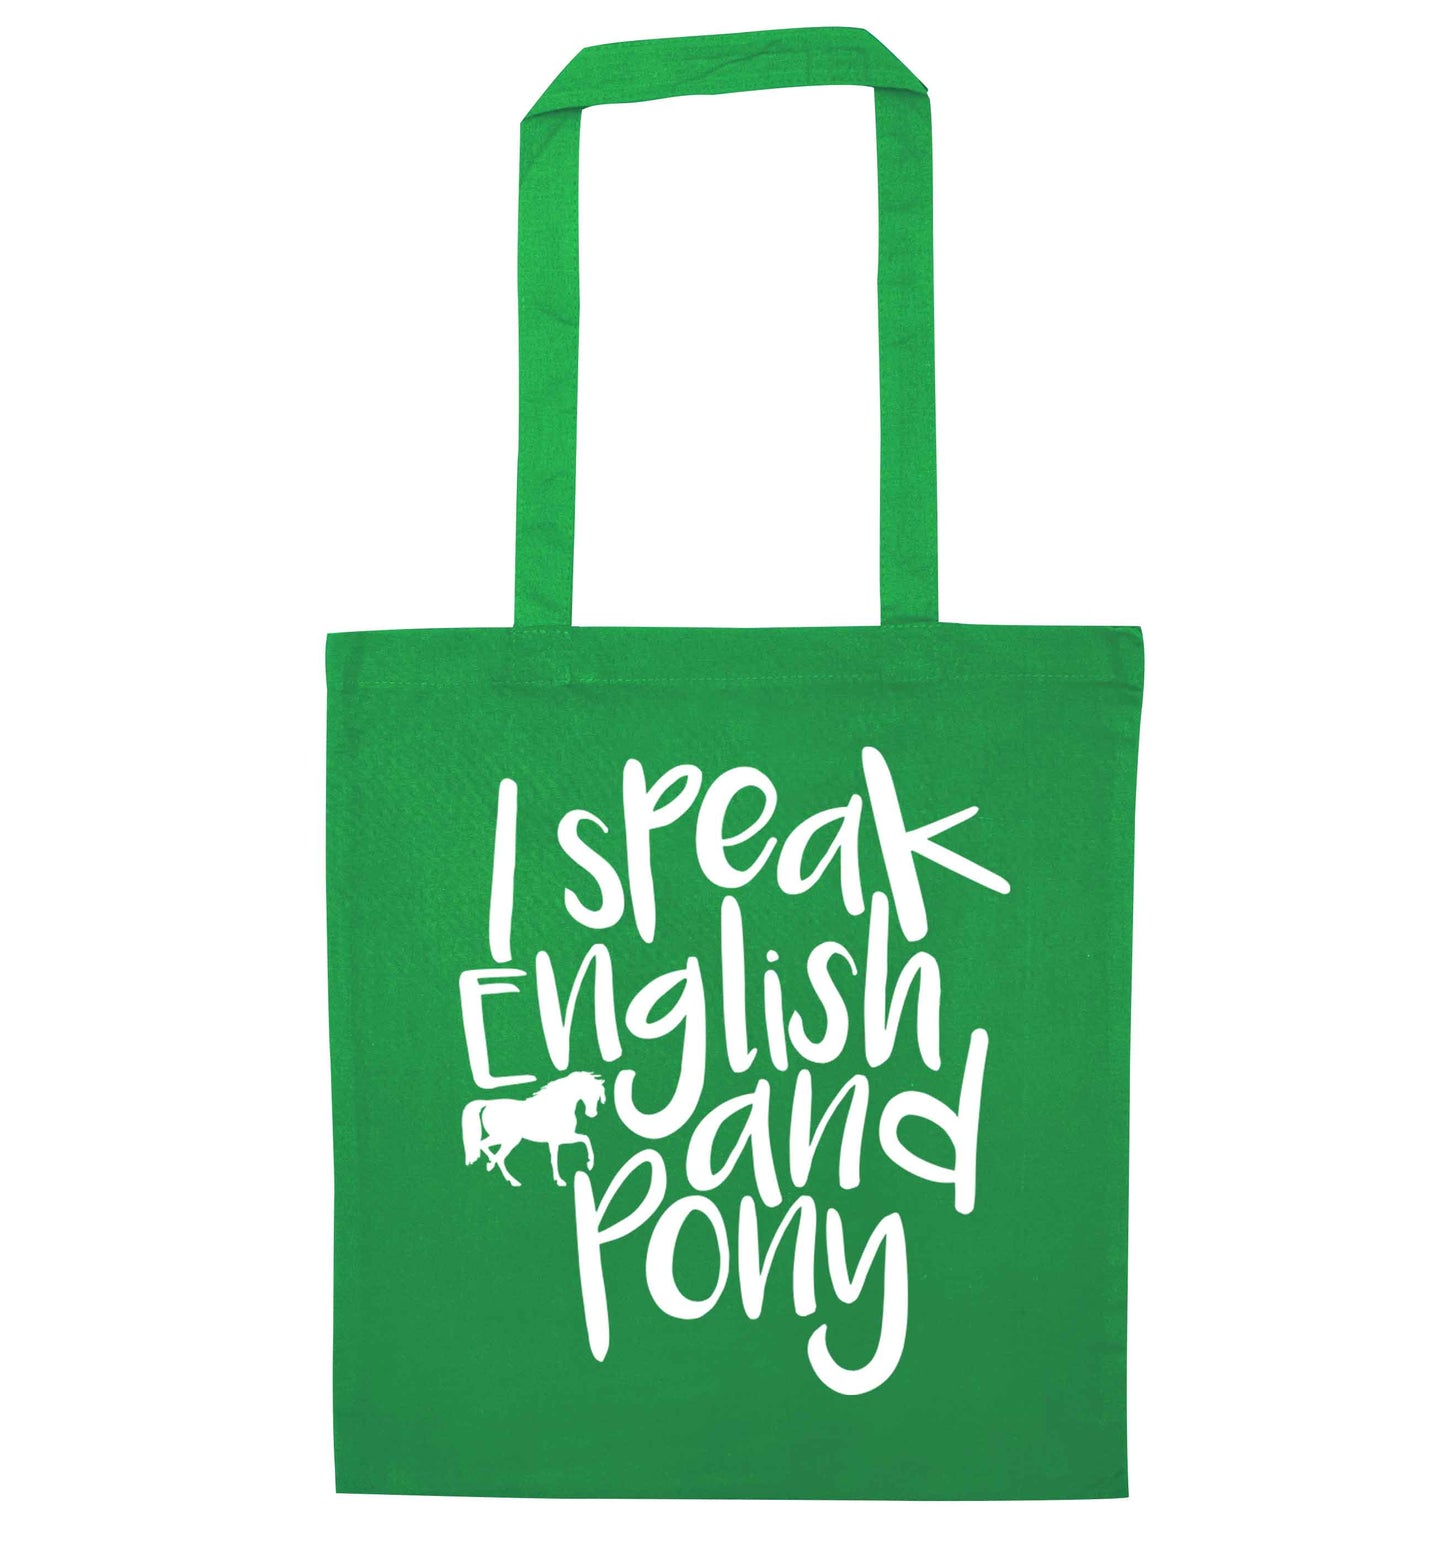 I speak English and pony green tote bag